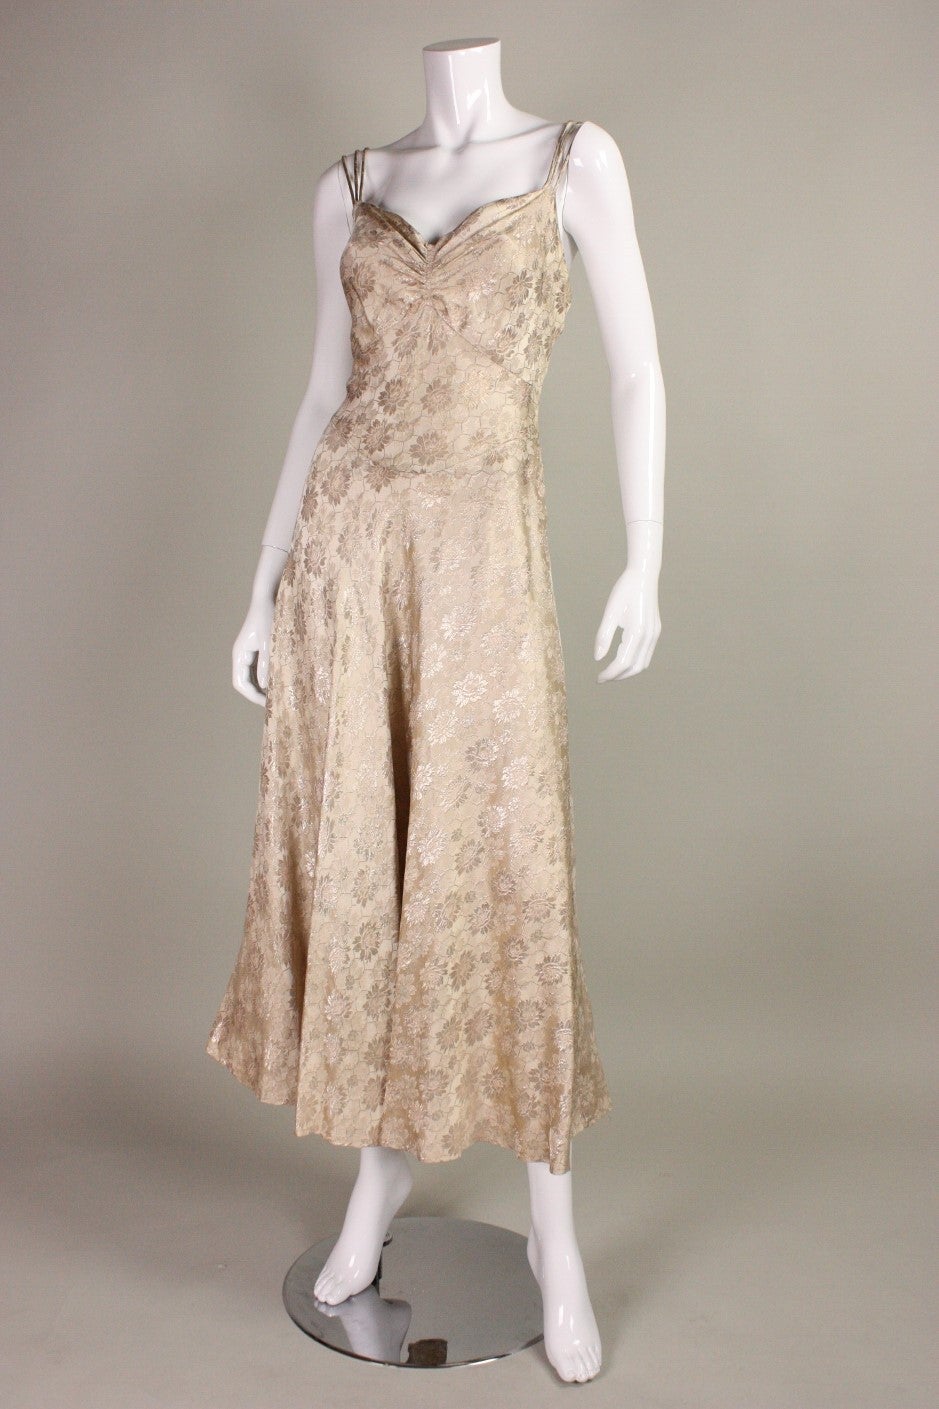 1930's Lamé Bias-Cut Evening Dress For Sale at 1stdibs